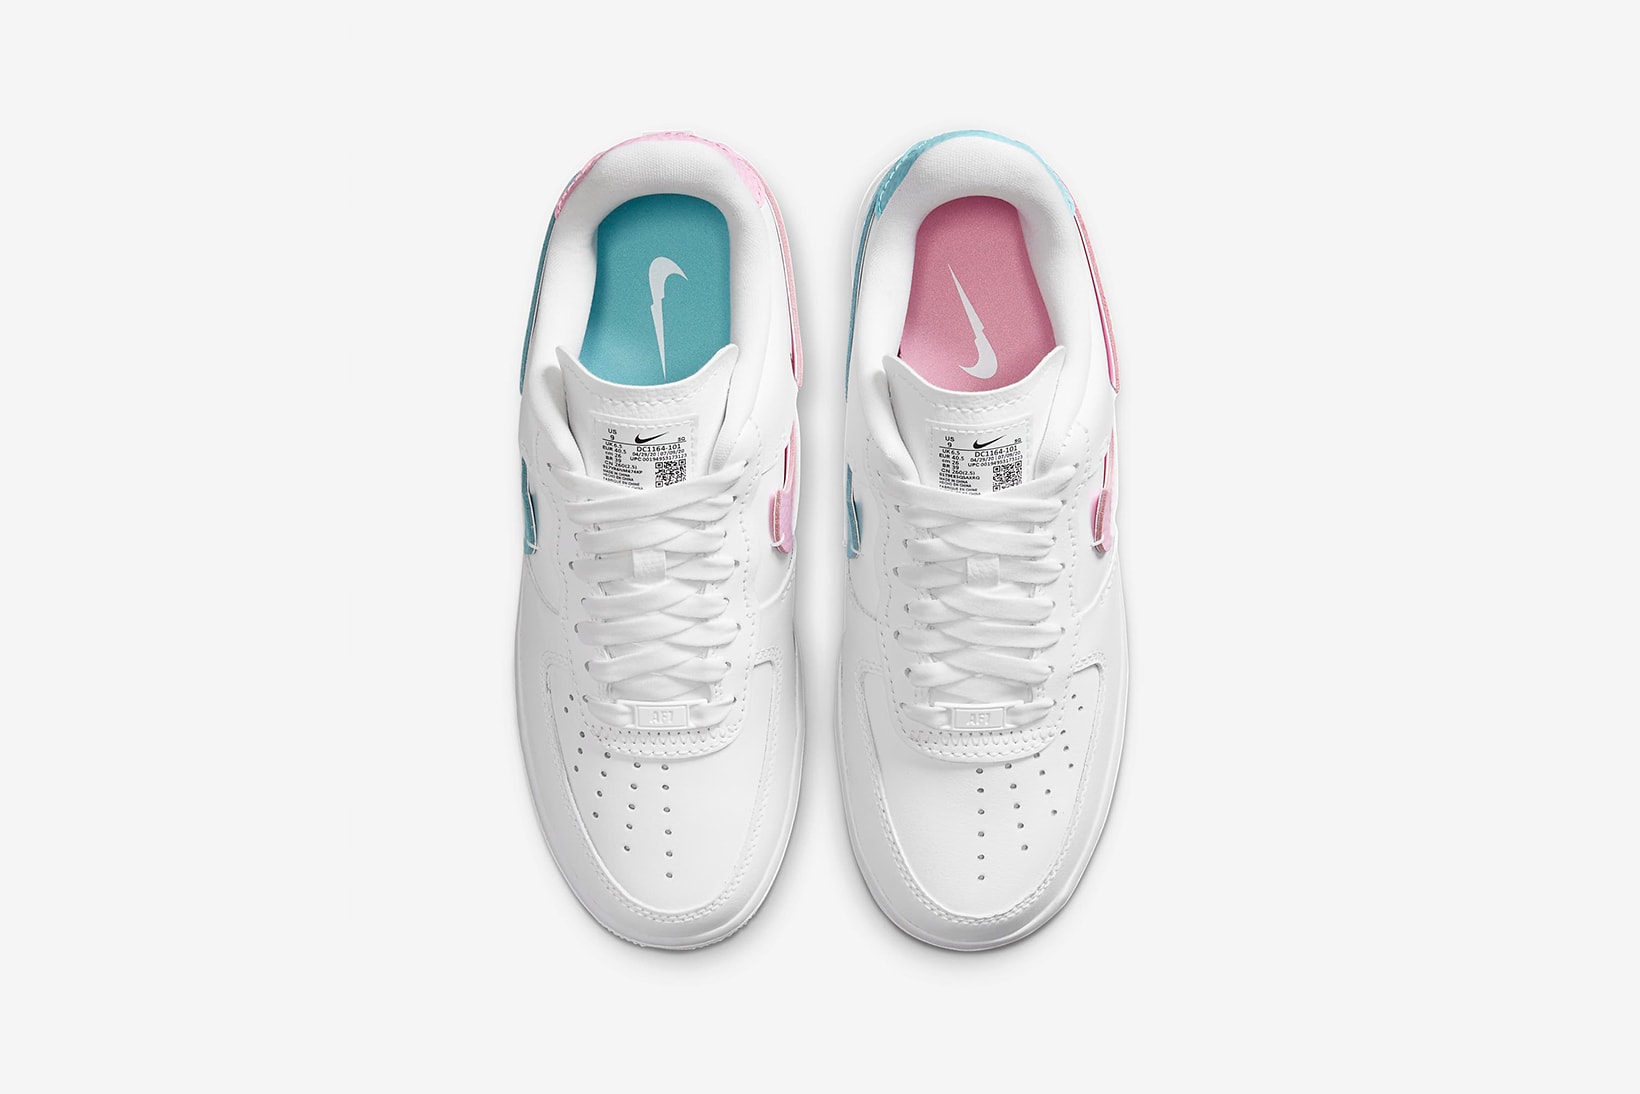 nike air force 1 lxx womens sneakers white pink red blue colorway sneakerhead shoes footwear